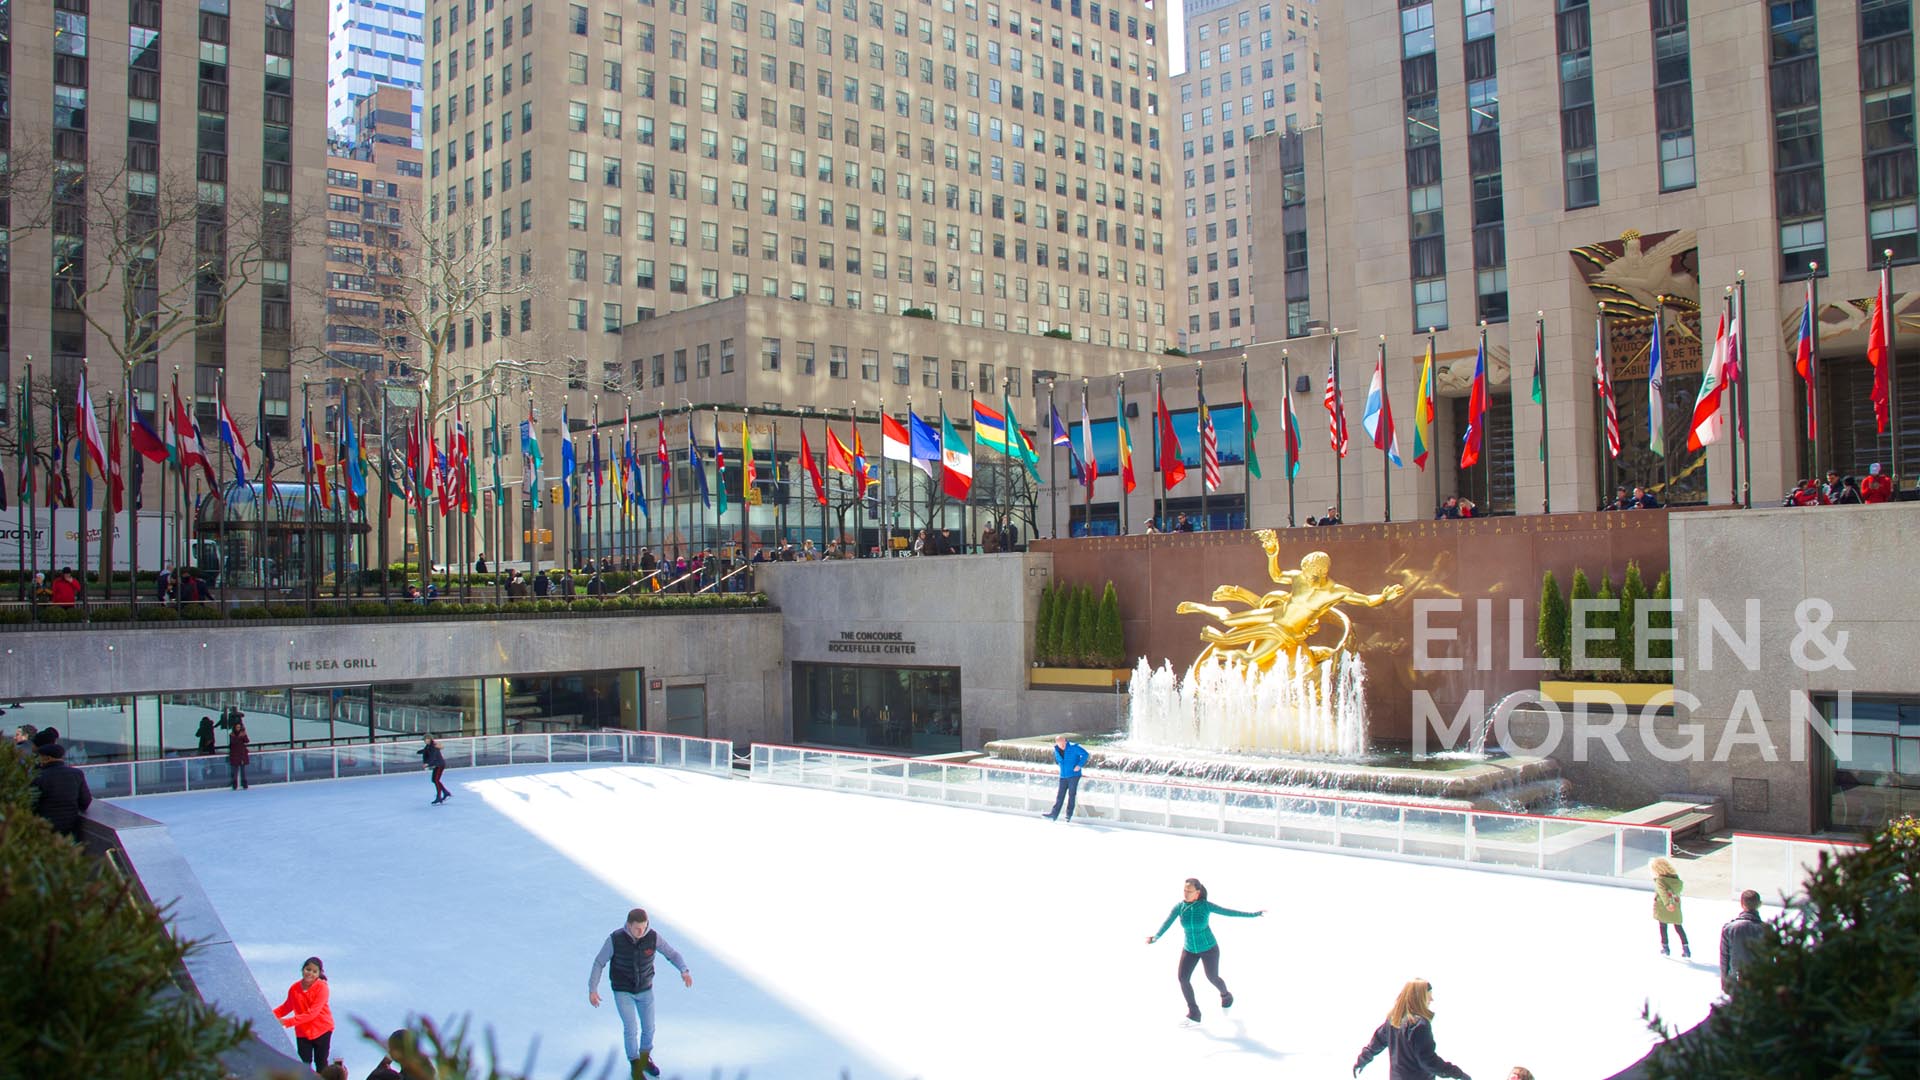 Rockefeller Plaza with skating ring